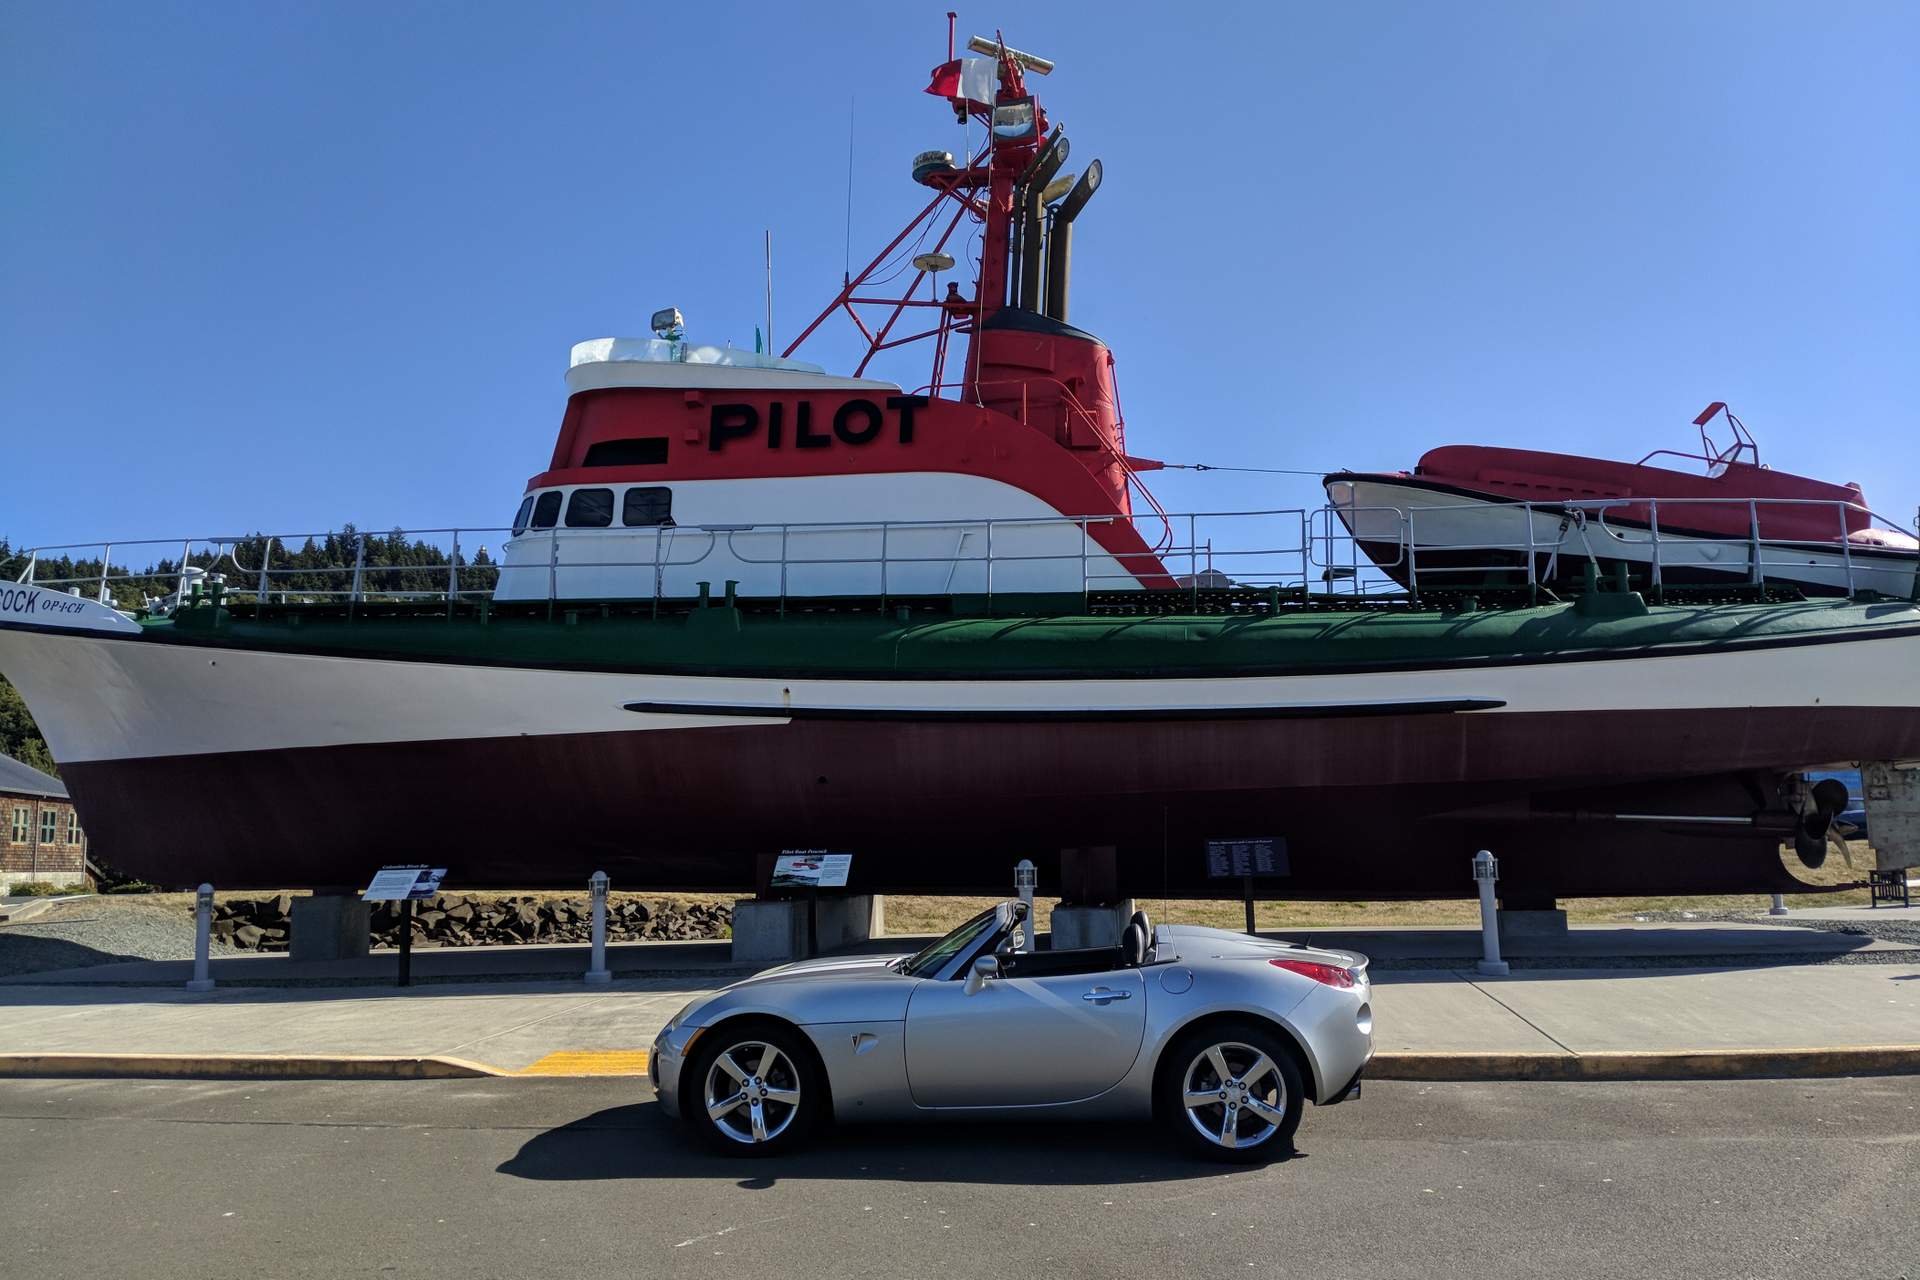 Silver Pontiac Solstice GXP in front of a Pilot ship in Astoria, Oregon.